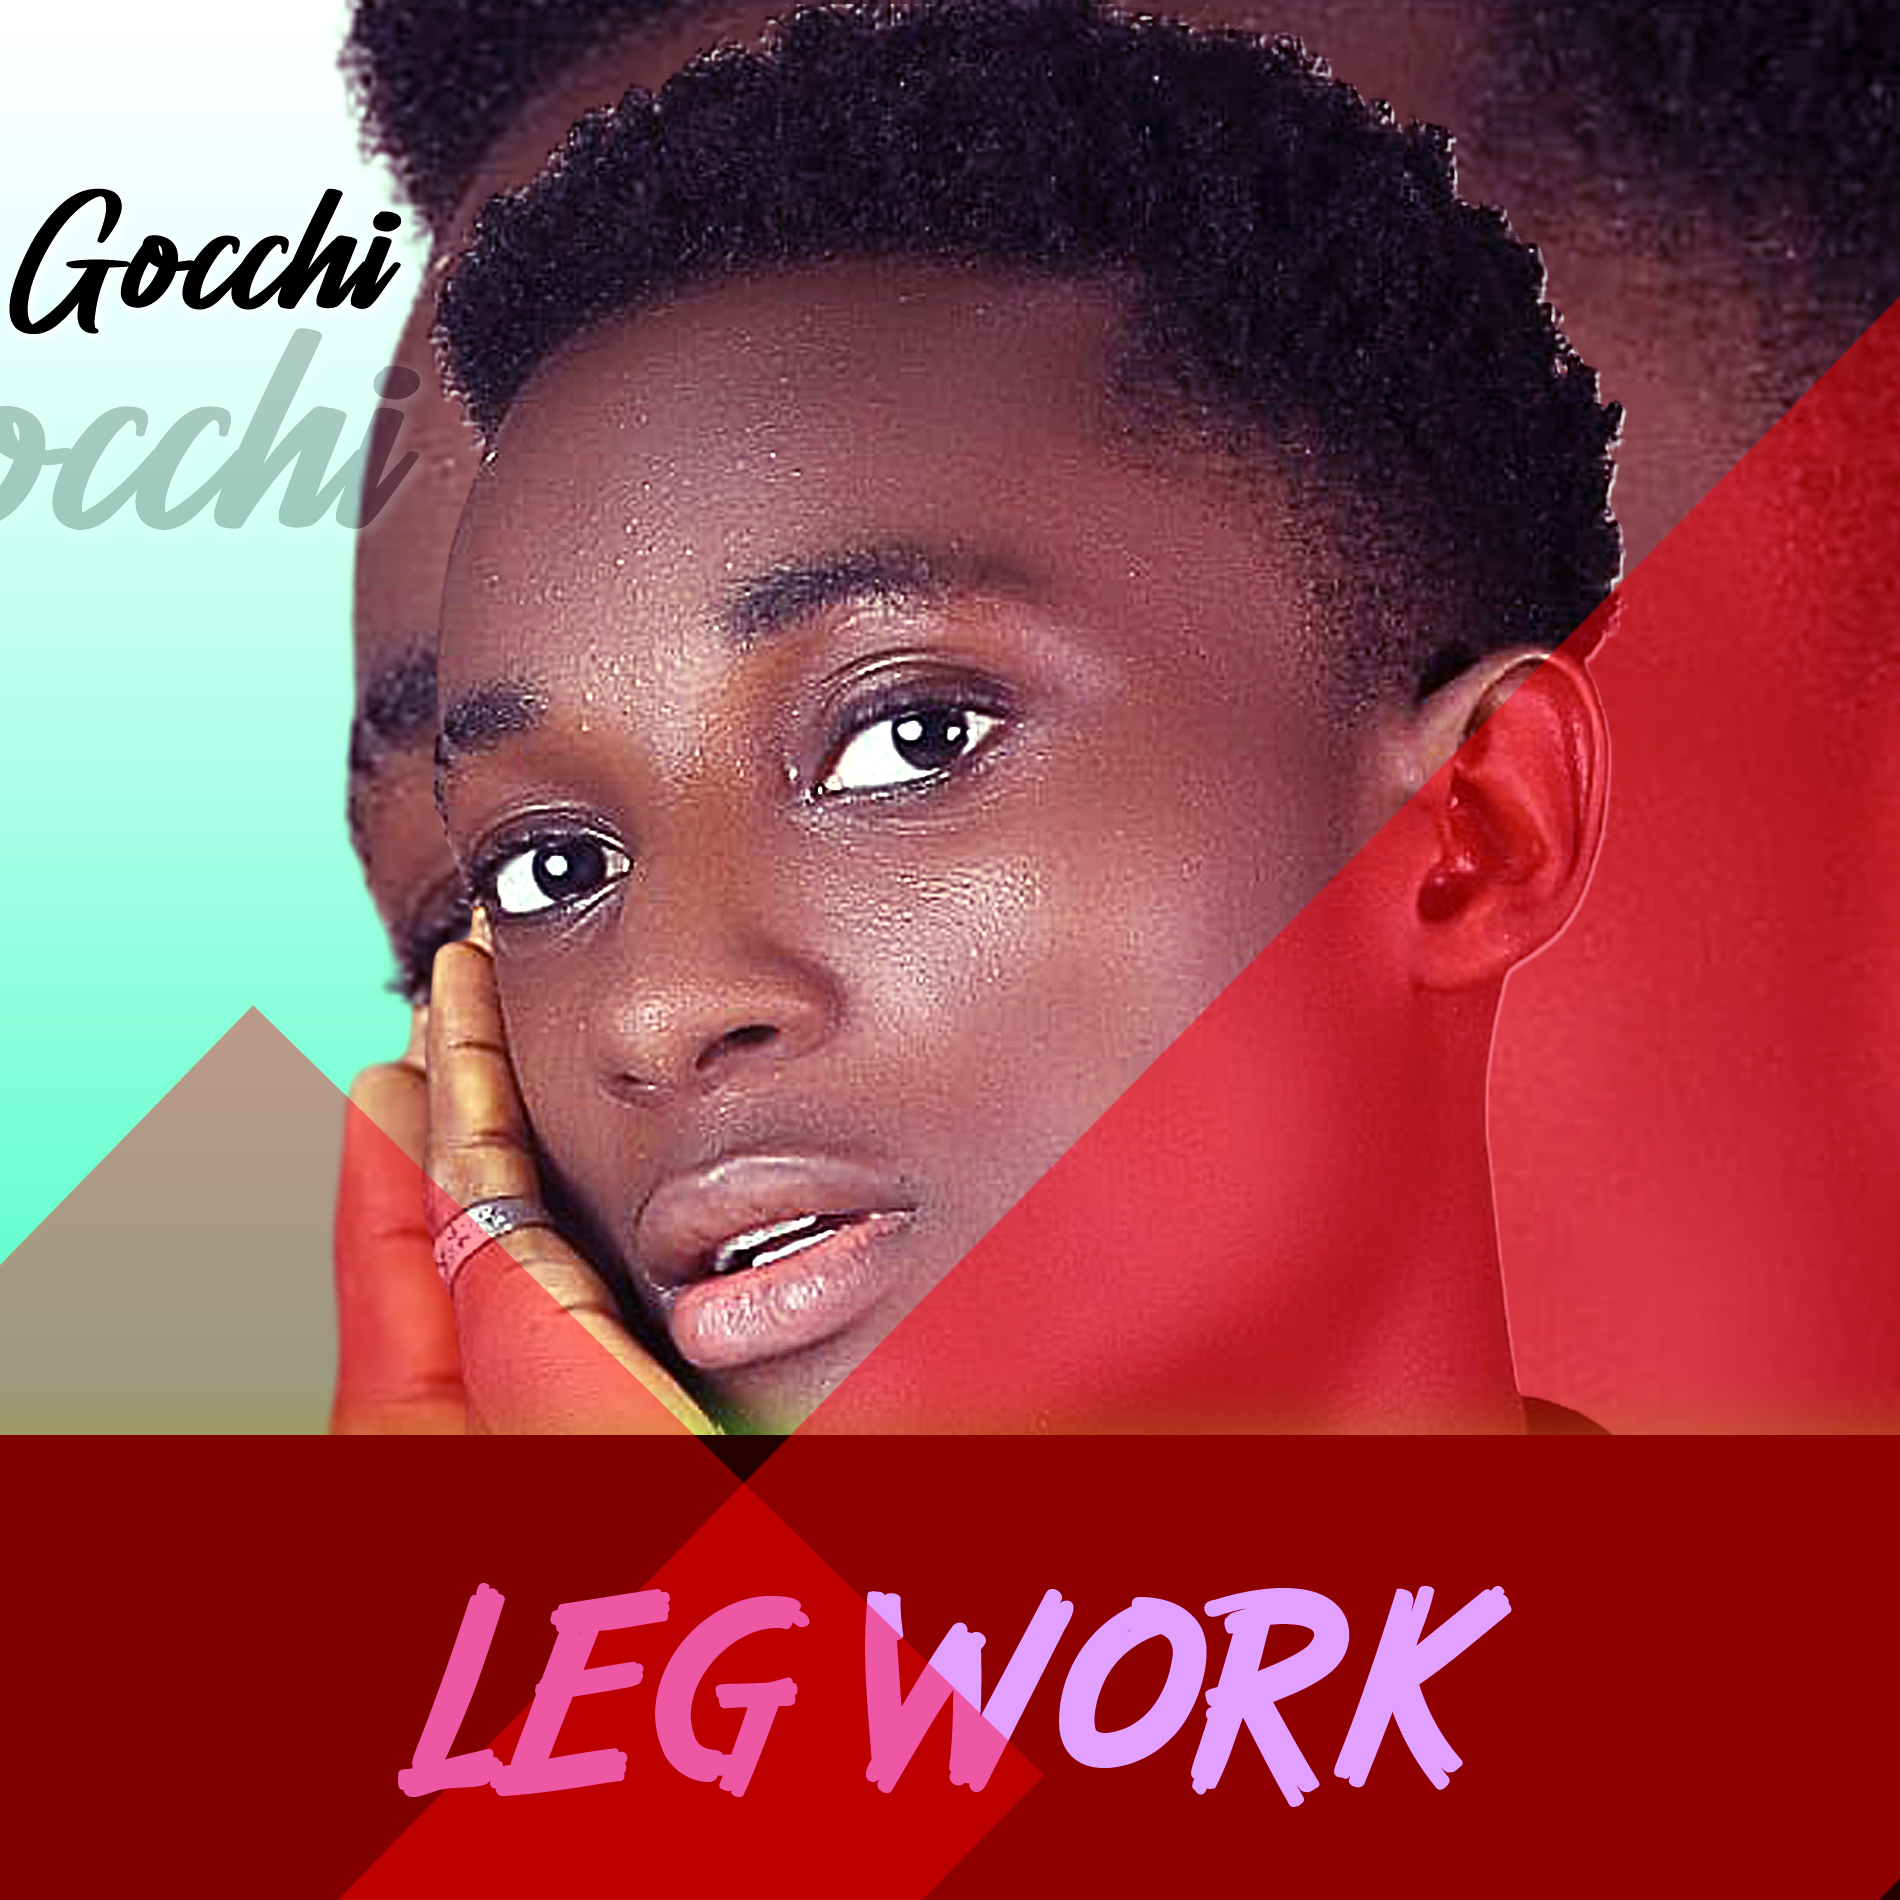 DOWNLOAD MUSIC: Gocchi – Leg Work